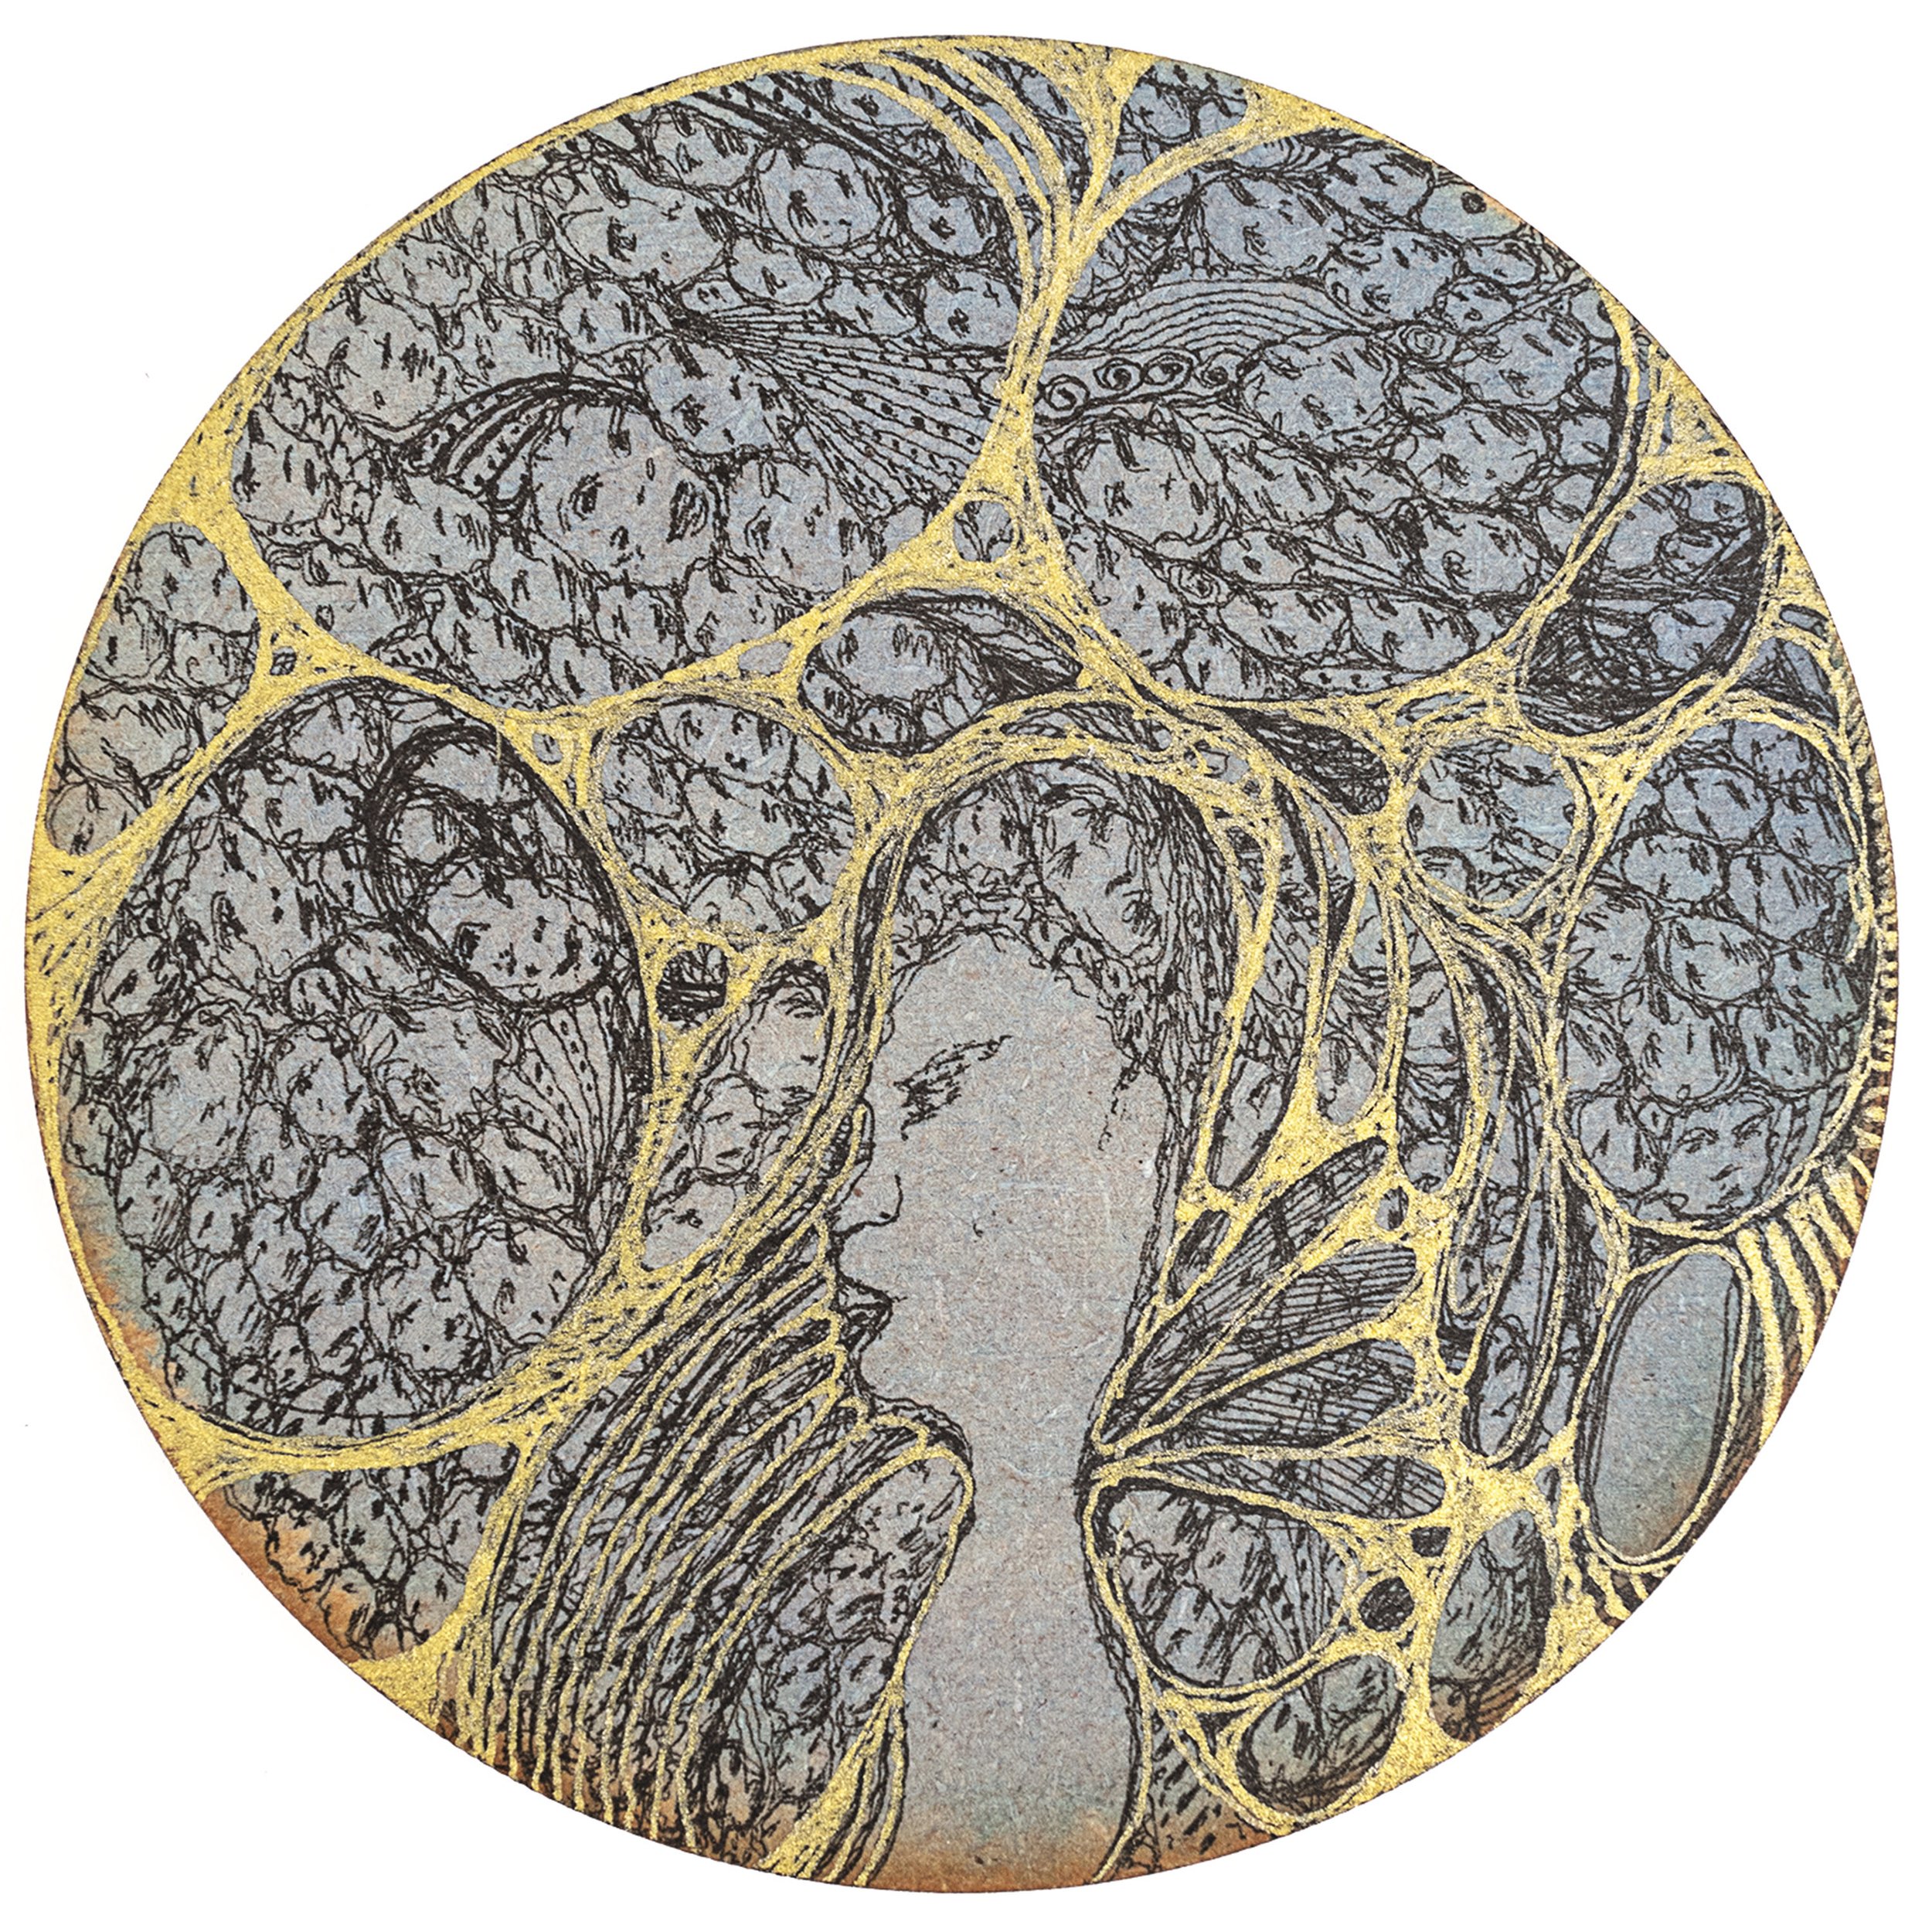  Chris Neate Untitled (22), 2022 Ink pen on painted MDF wood 10cm diameter, 3.9 inch diameter Photograph by Ellie Walmsley 